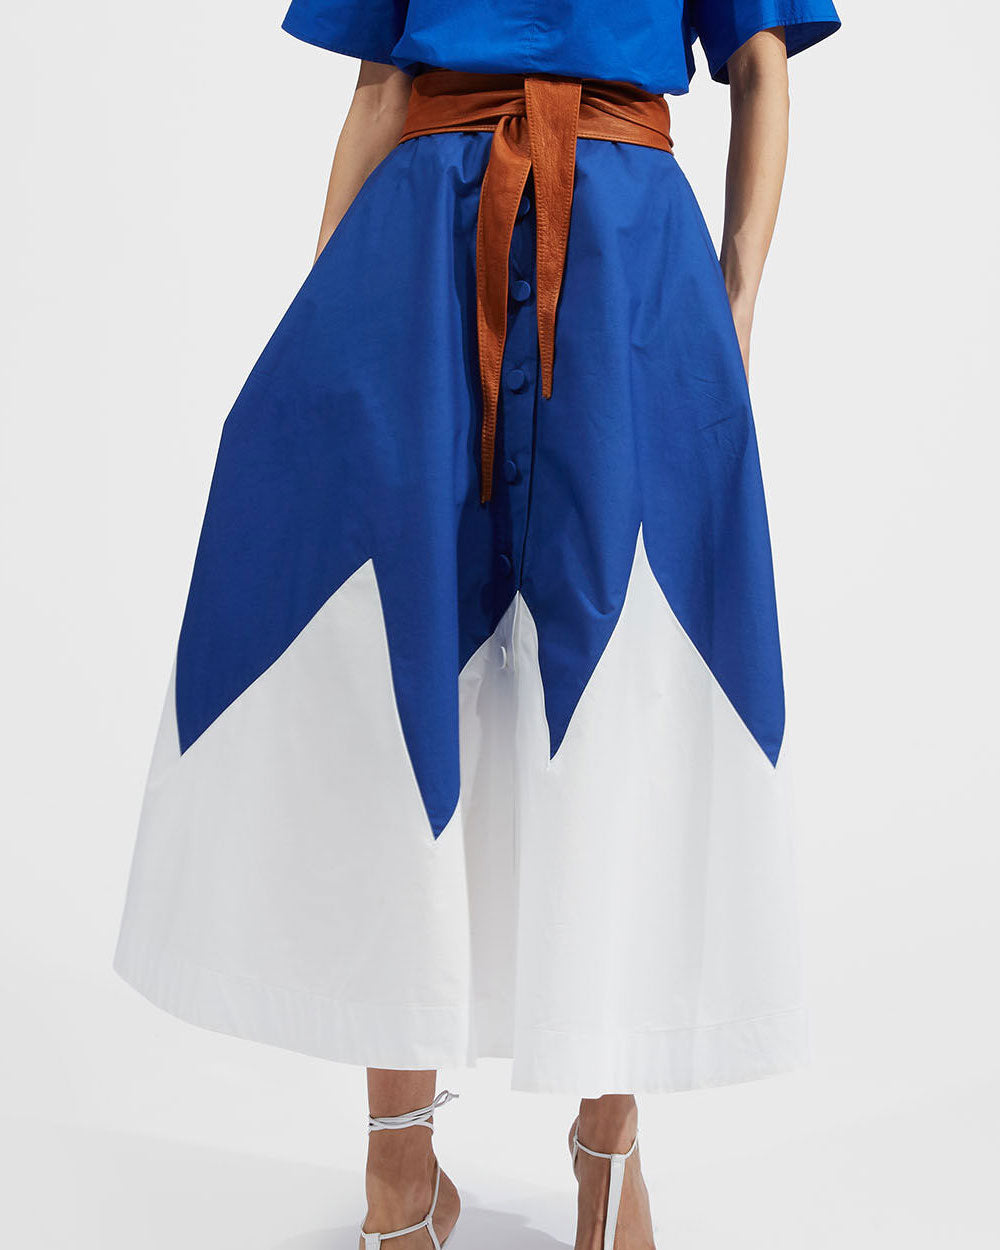 Blu Holiday Skirt